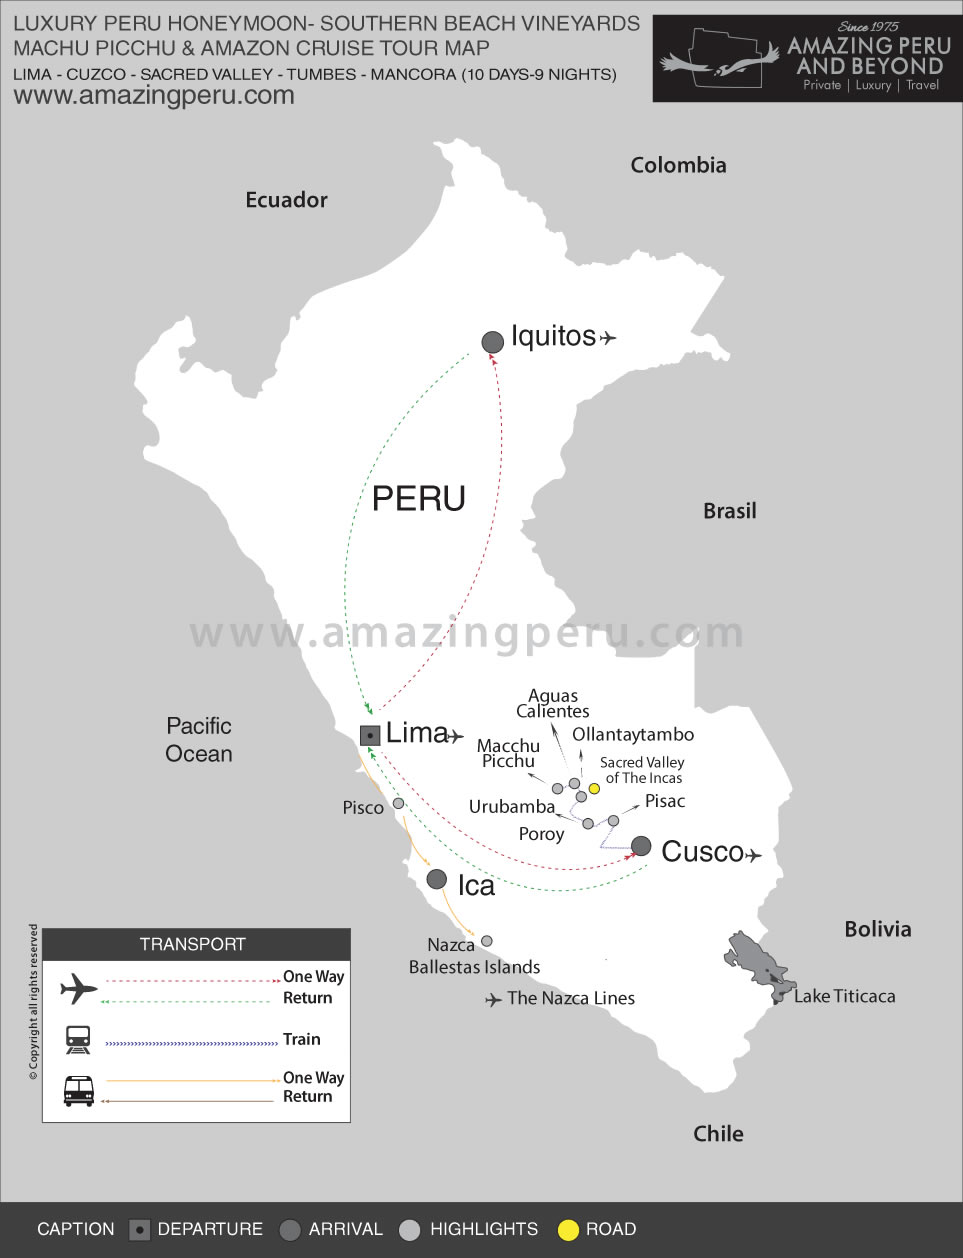 Luxury Peru Honeymoon - Southern Beach, Vineyards, Machu Picchu & Amazon Cruise - 11 days / 10 nights.